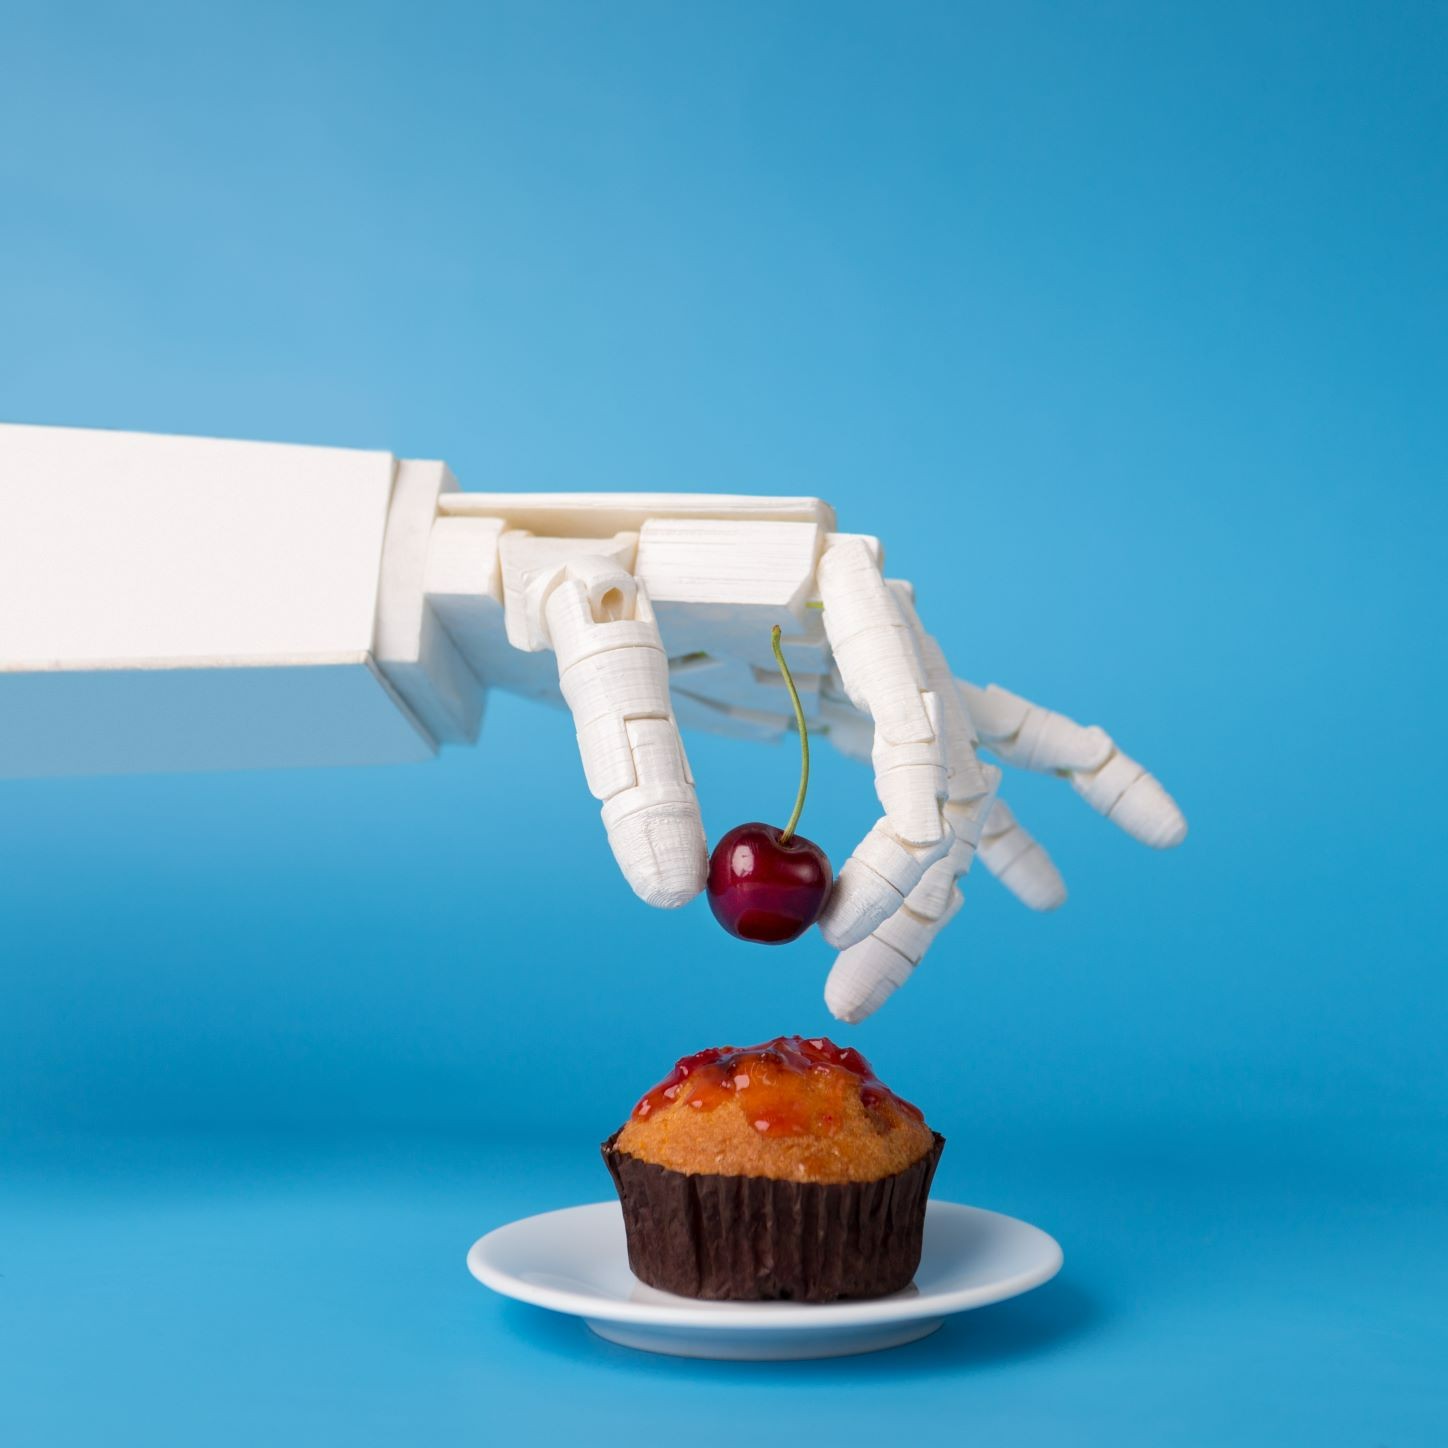 Advanced robotics may ease restaurant labor shortages | Dell Technologies  Italy